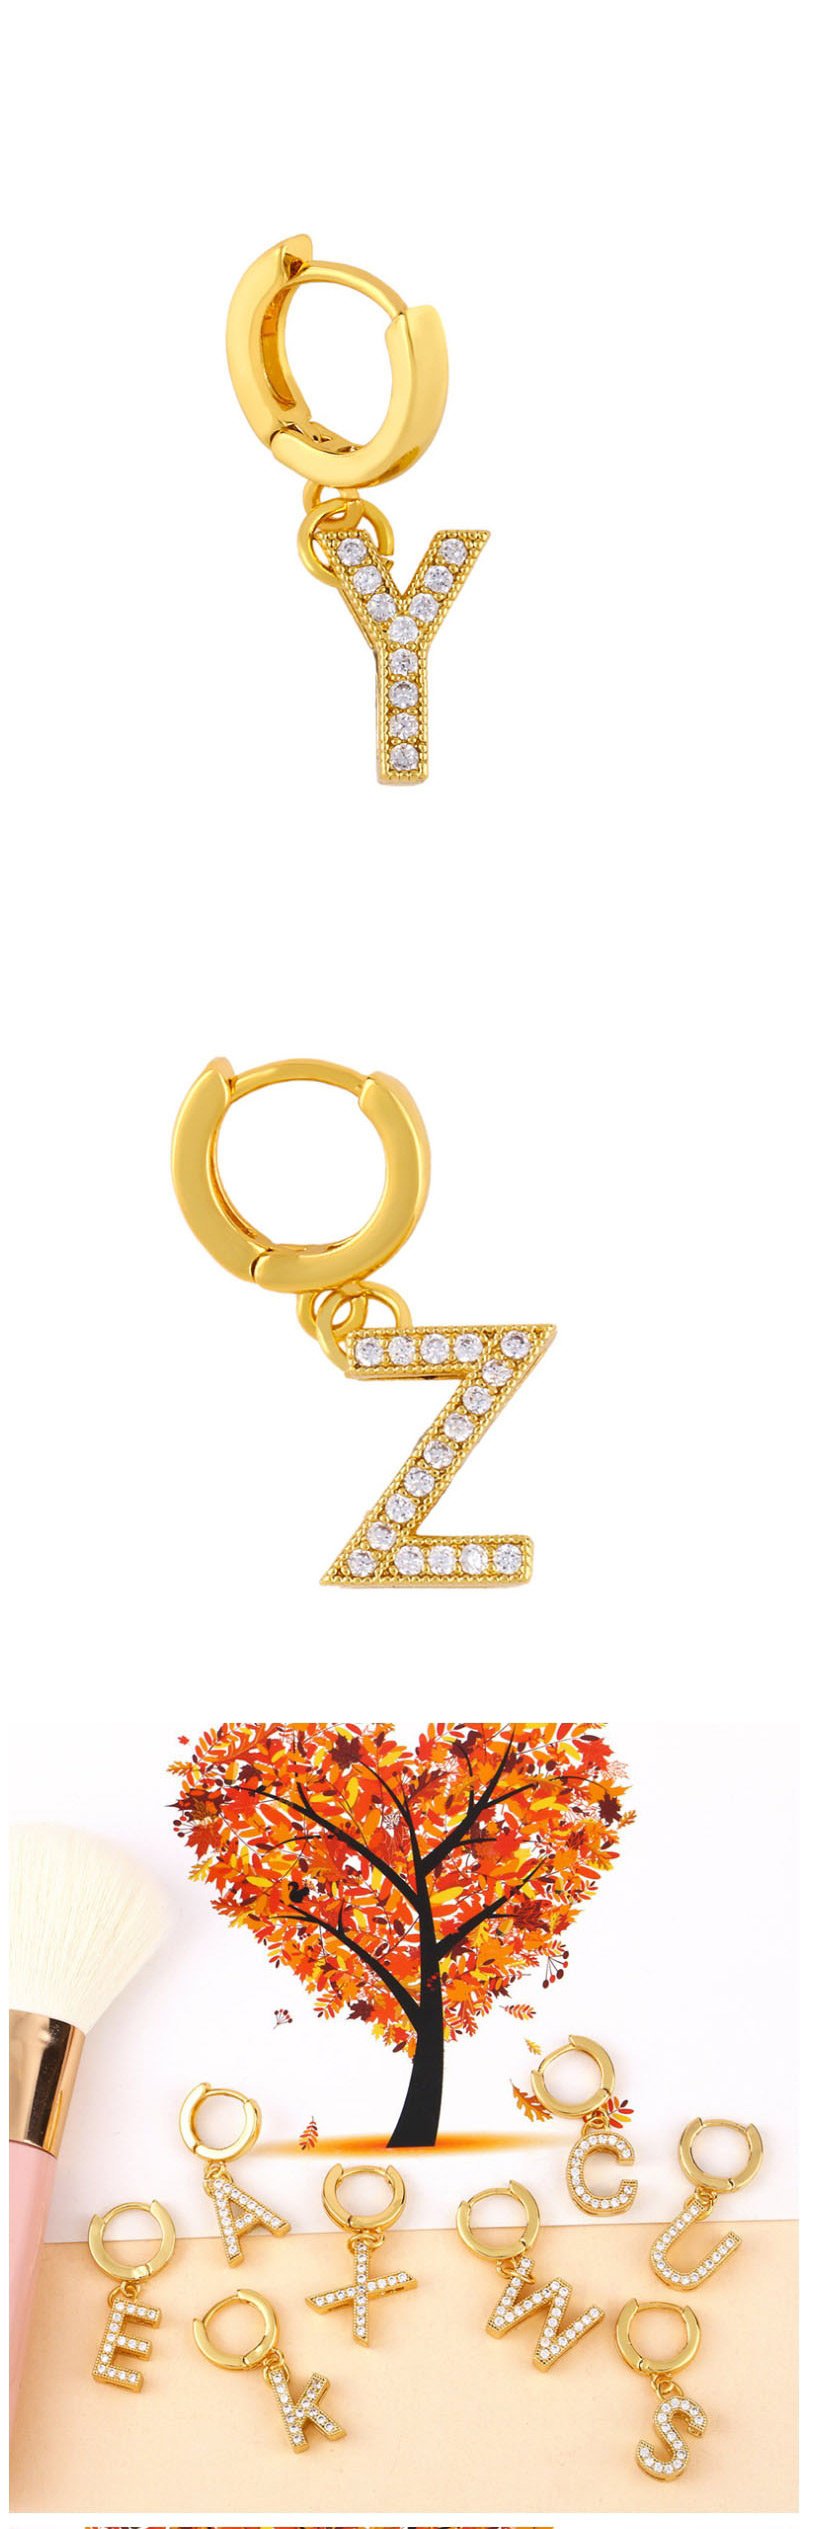 Fashion P Golden Diamond Letter Earrings,Earrings